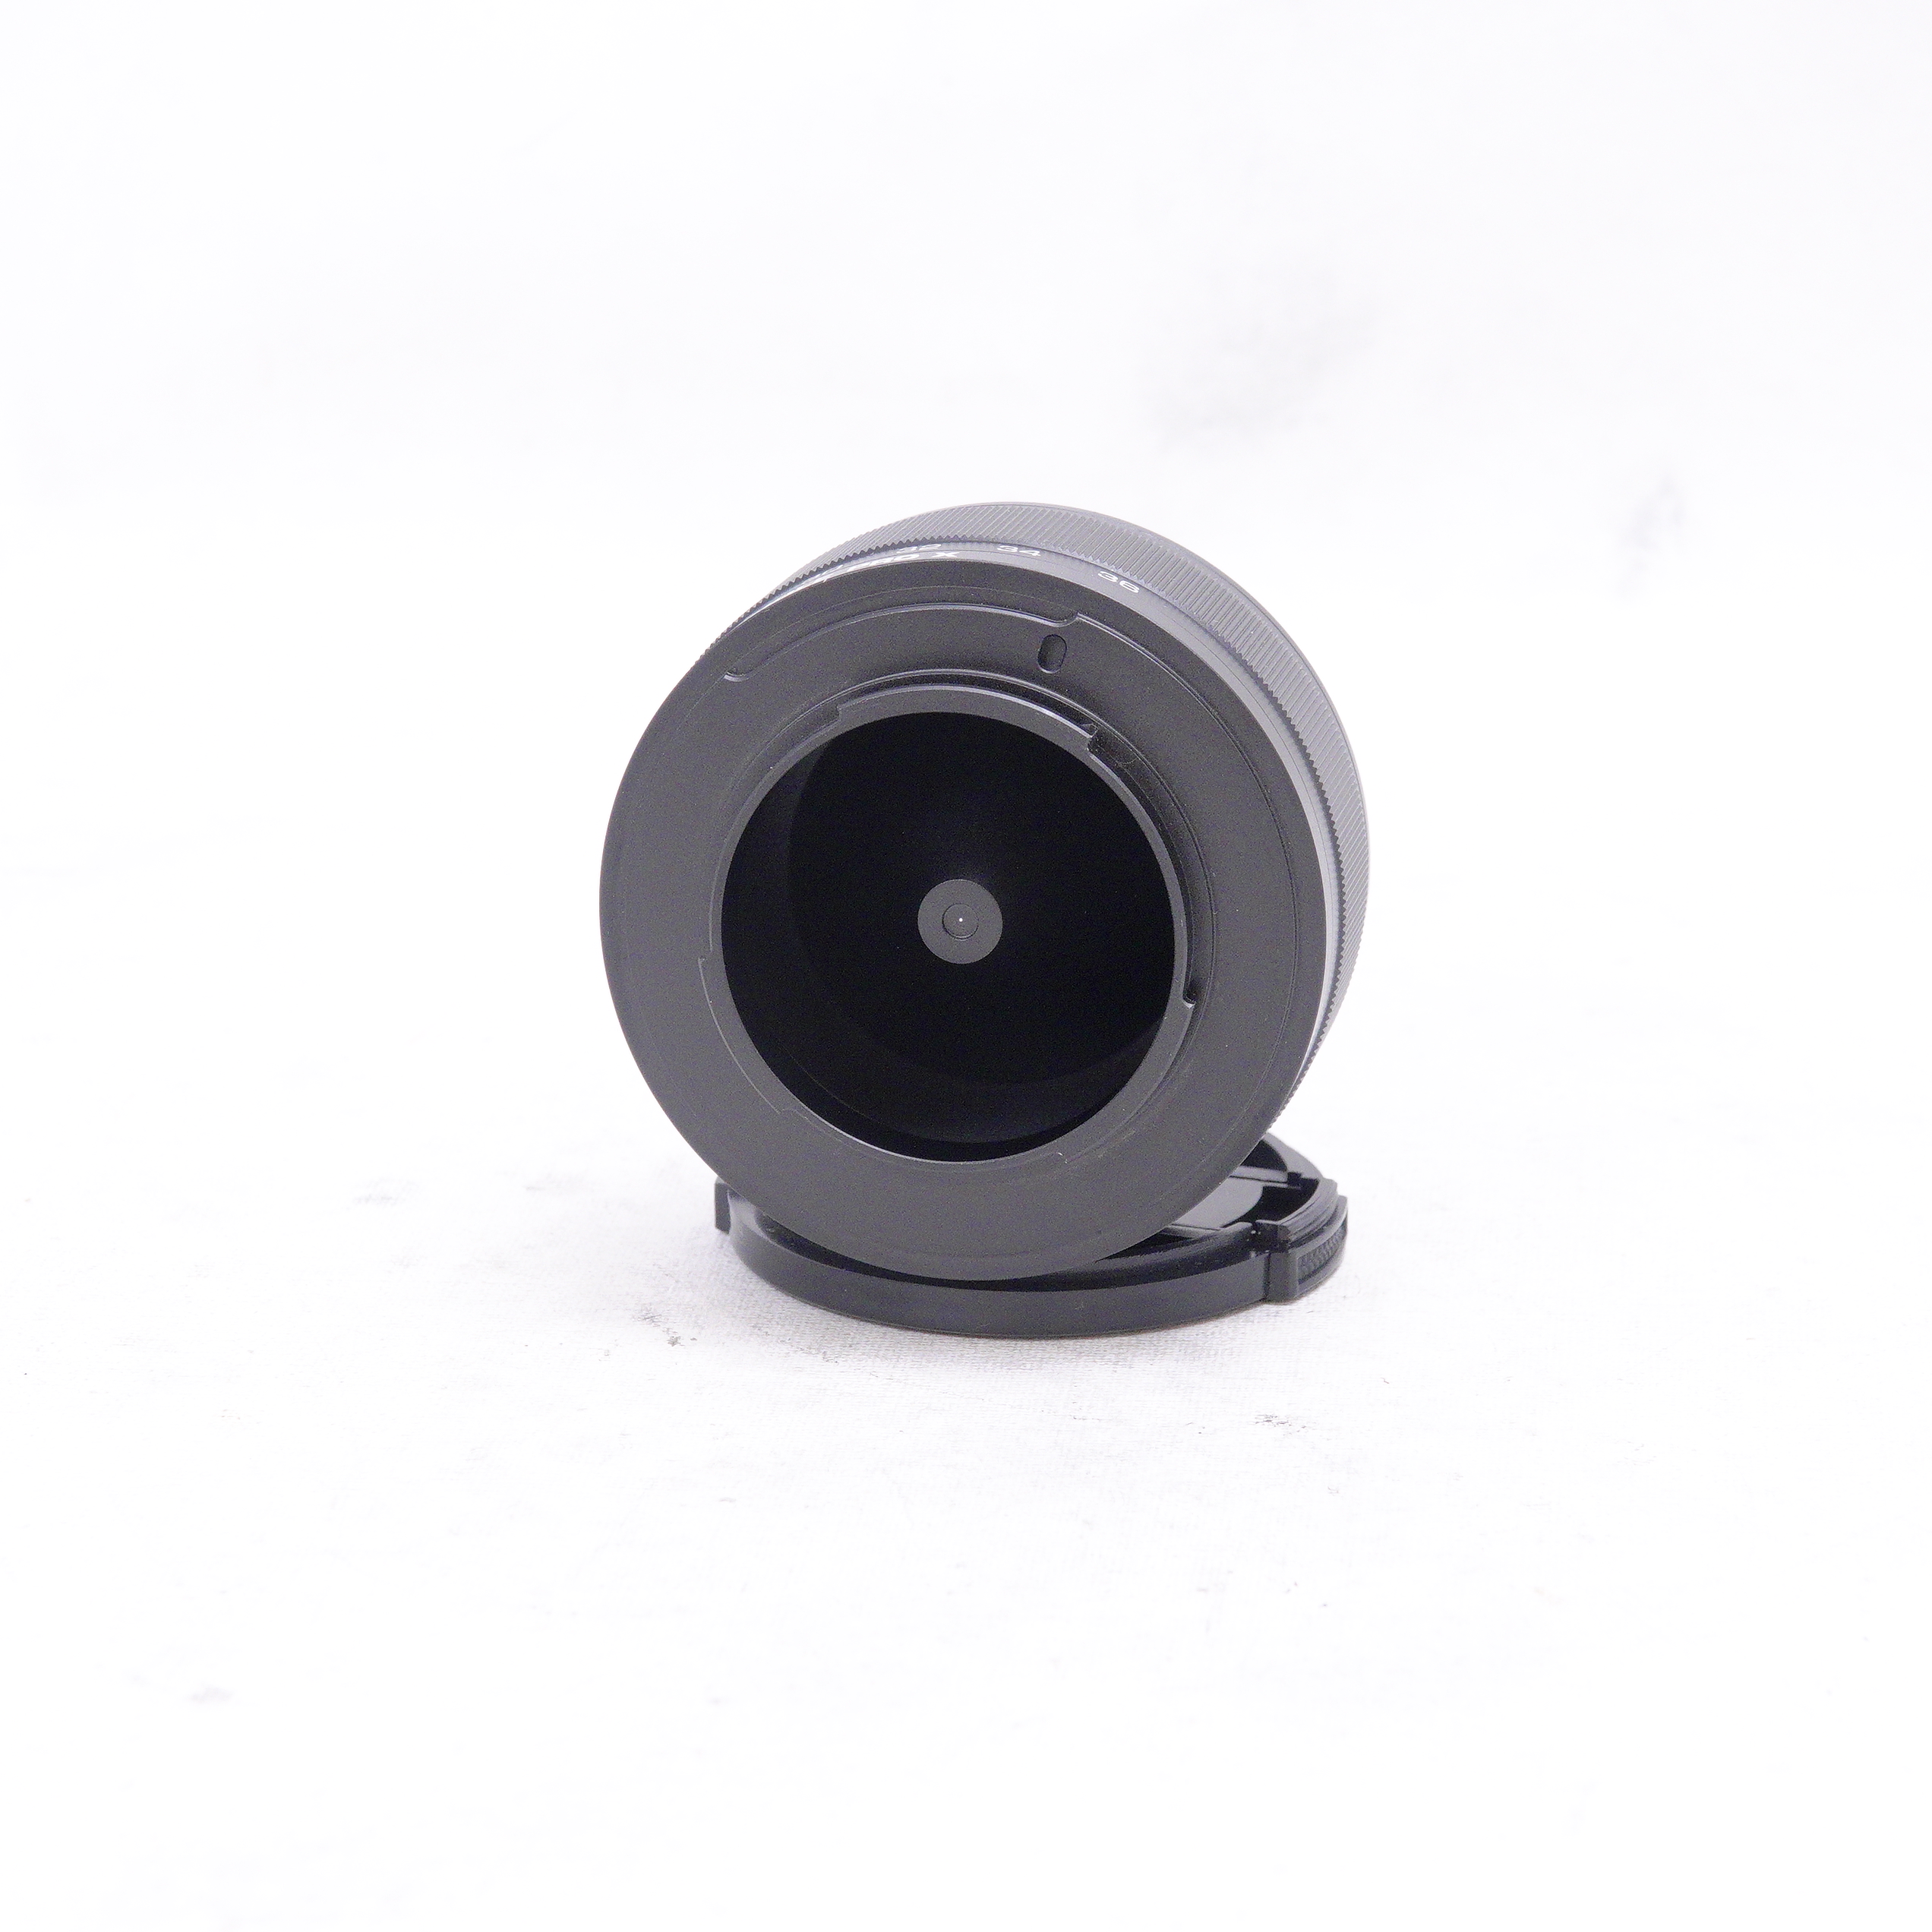 Lente Thingyfy pinhole pro x 18-36mm FX mount - Usado